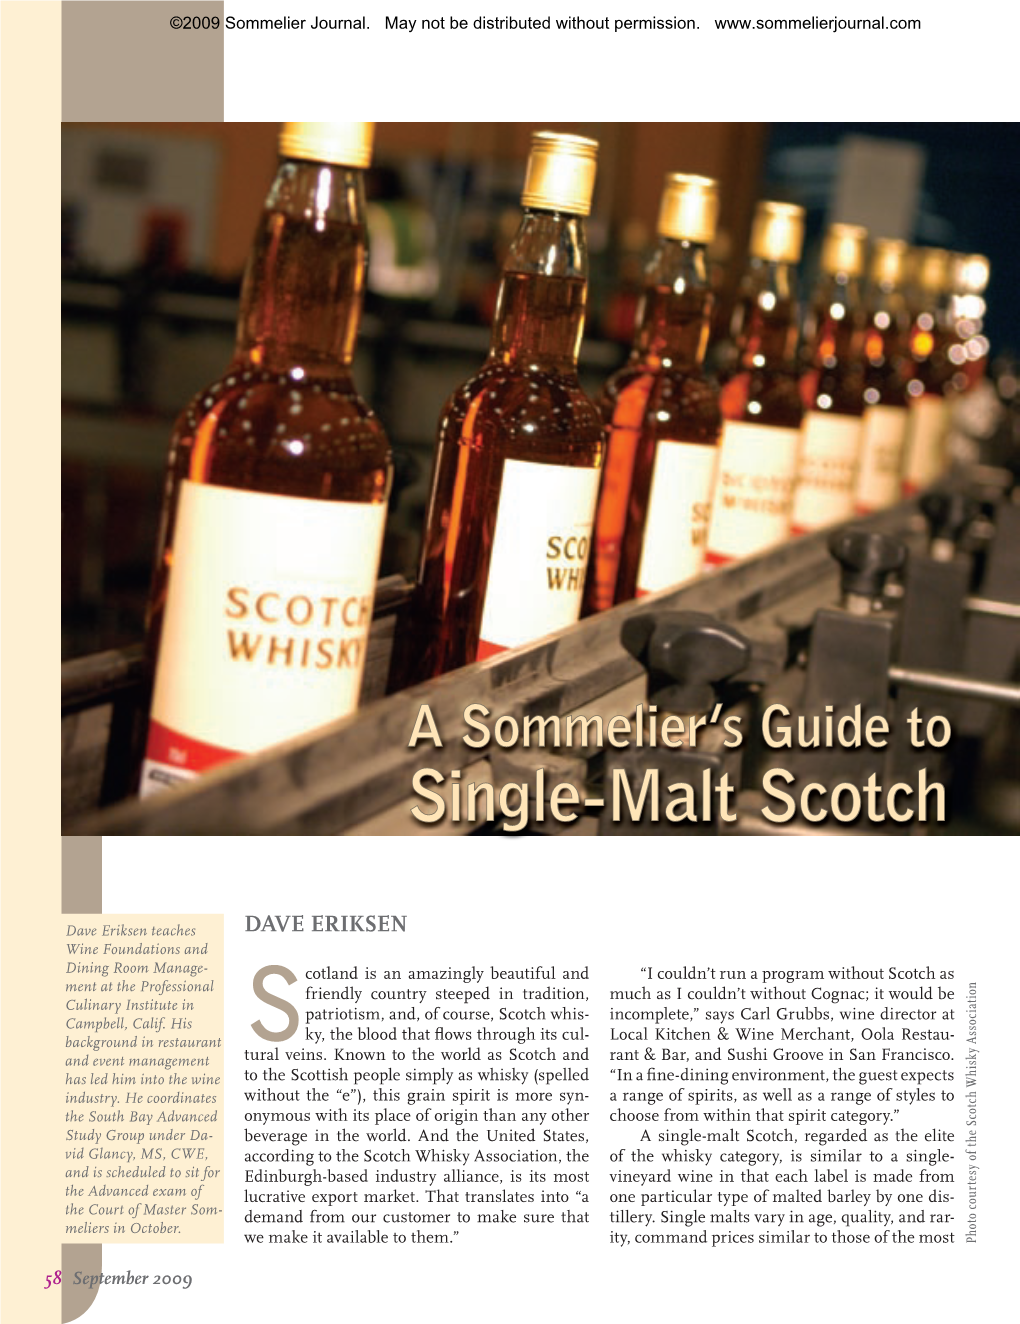 Single-Malt Scotch